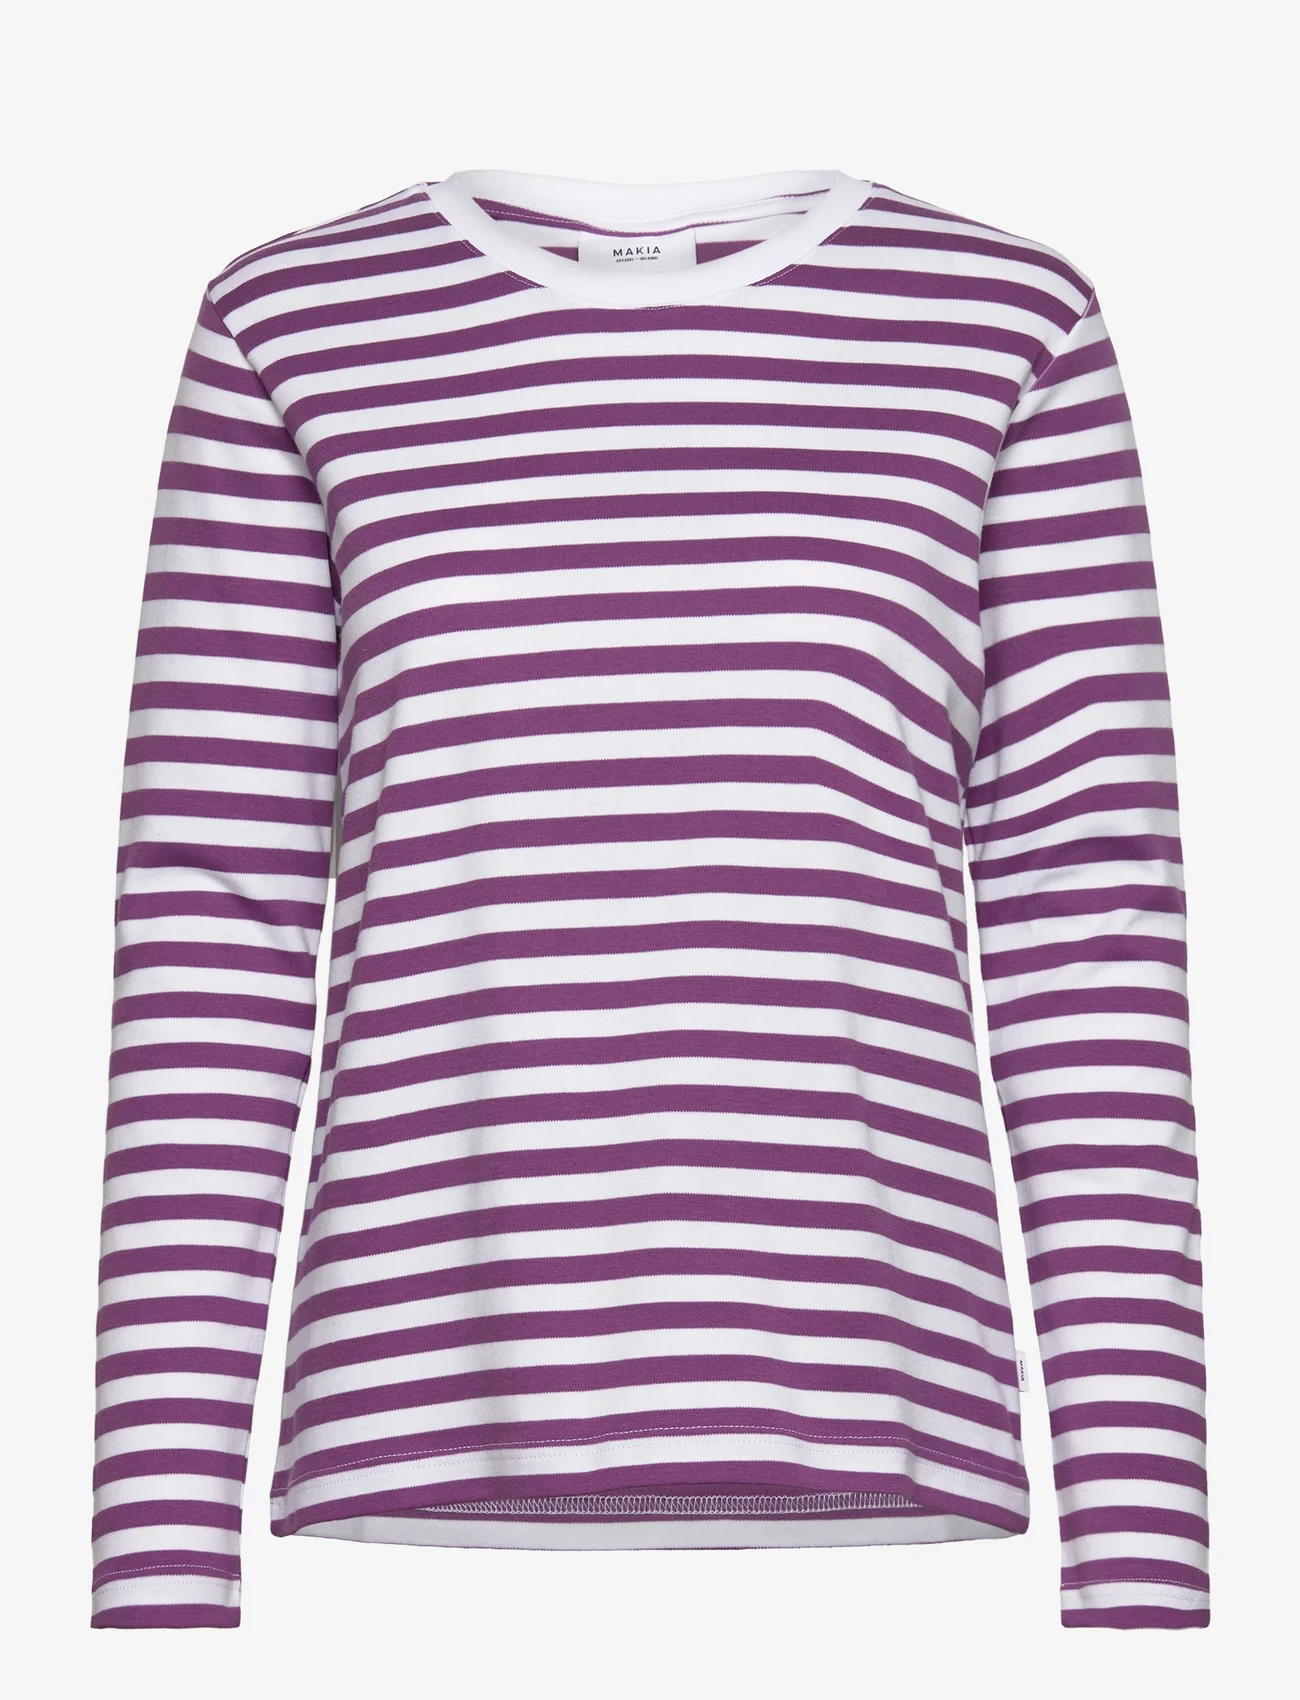 Makia - Verkstad Long Sleeve - t-shirt & tops - purple-white - 0